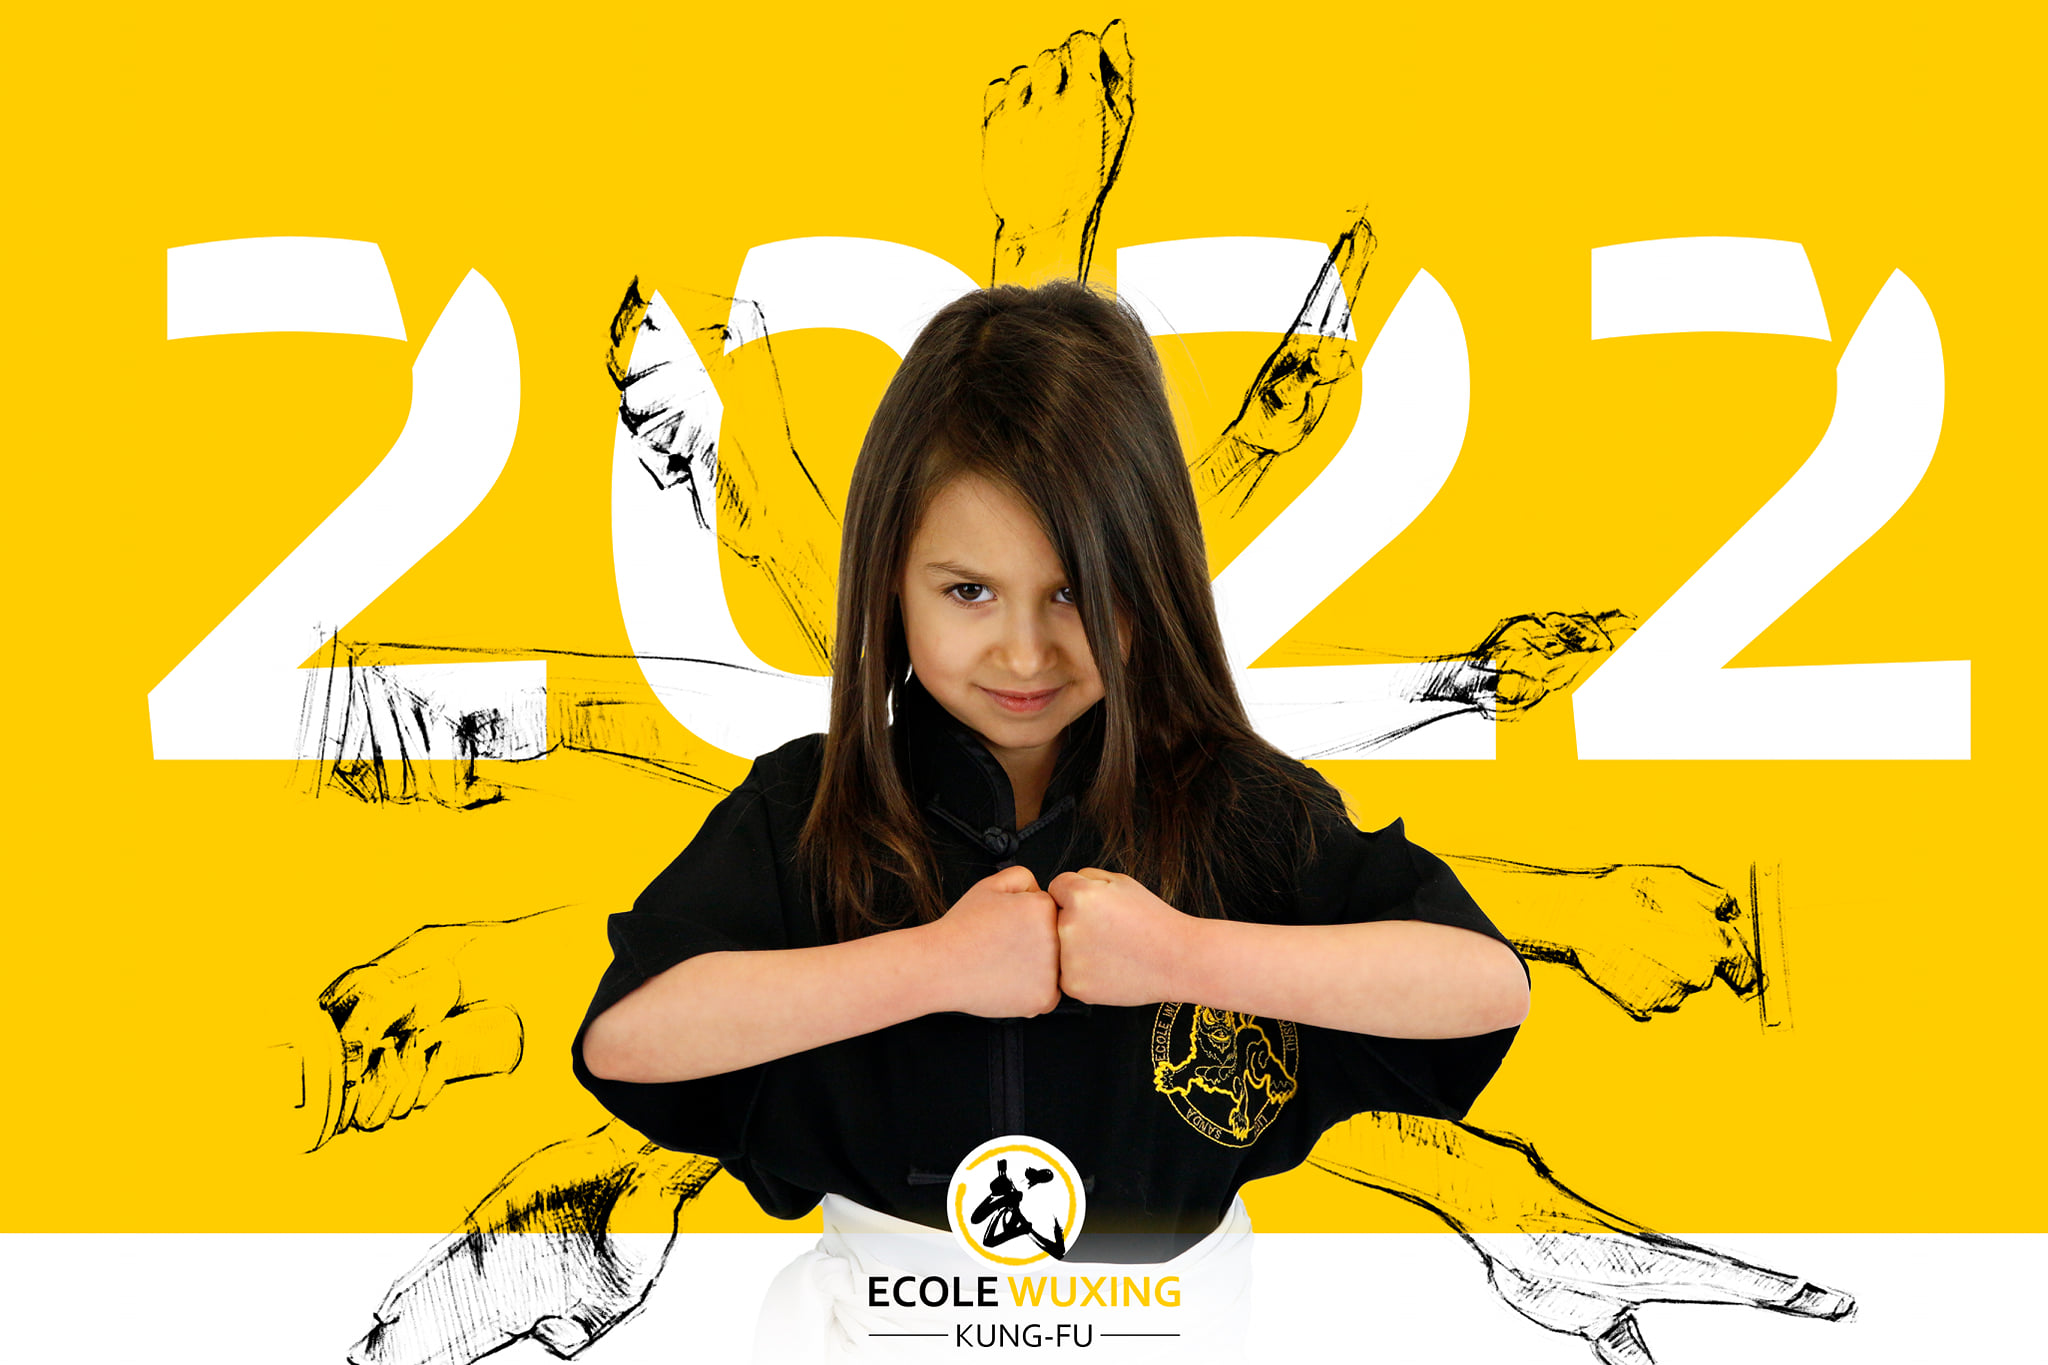 Bonne année 2022 Ecole Wuxing Kung-Fu Wushu Bousse Vigy